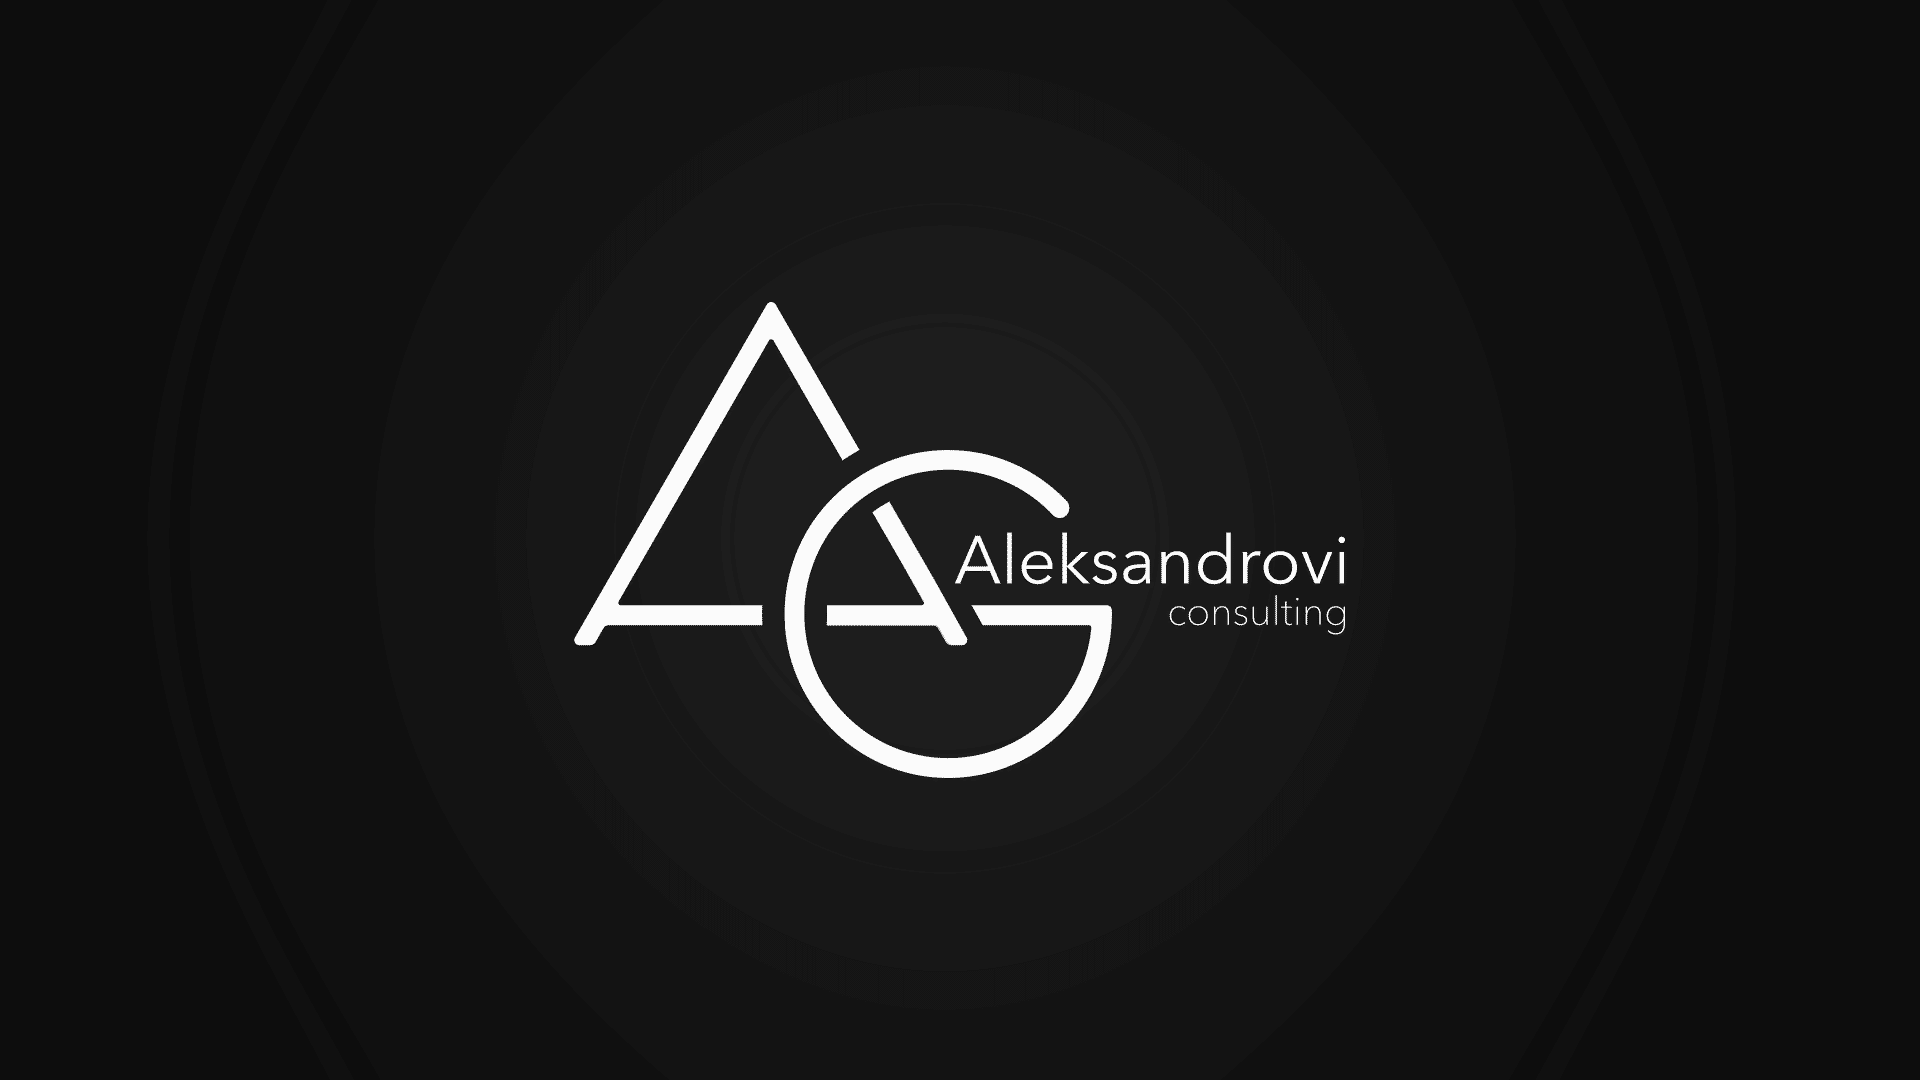 aleksandrovi consulting logo design